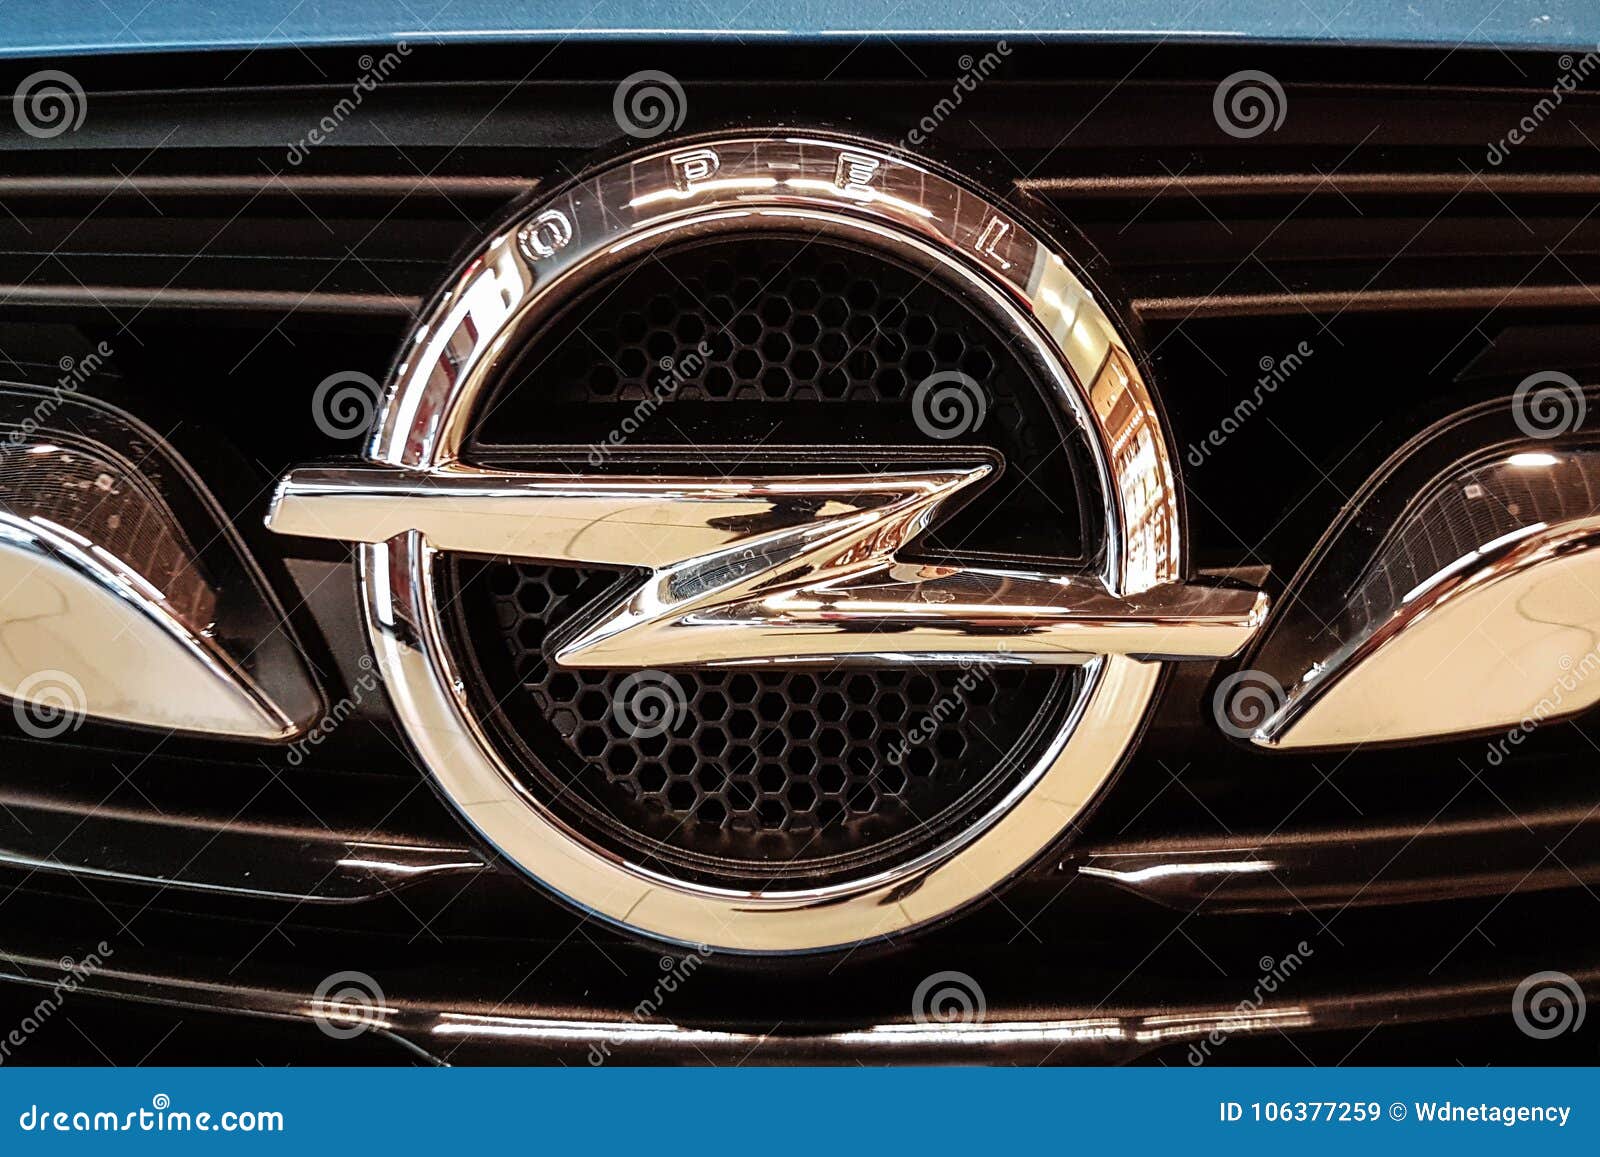 https://thumbs.dreamstime.com/z/tarnow-poland-october-new-opel-emblem-car-grill-famous-german-automobile-manufacturer-designs-produces-106377259.jpg